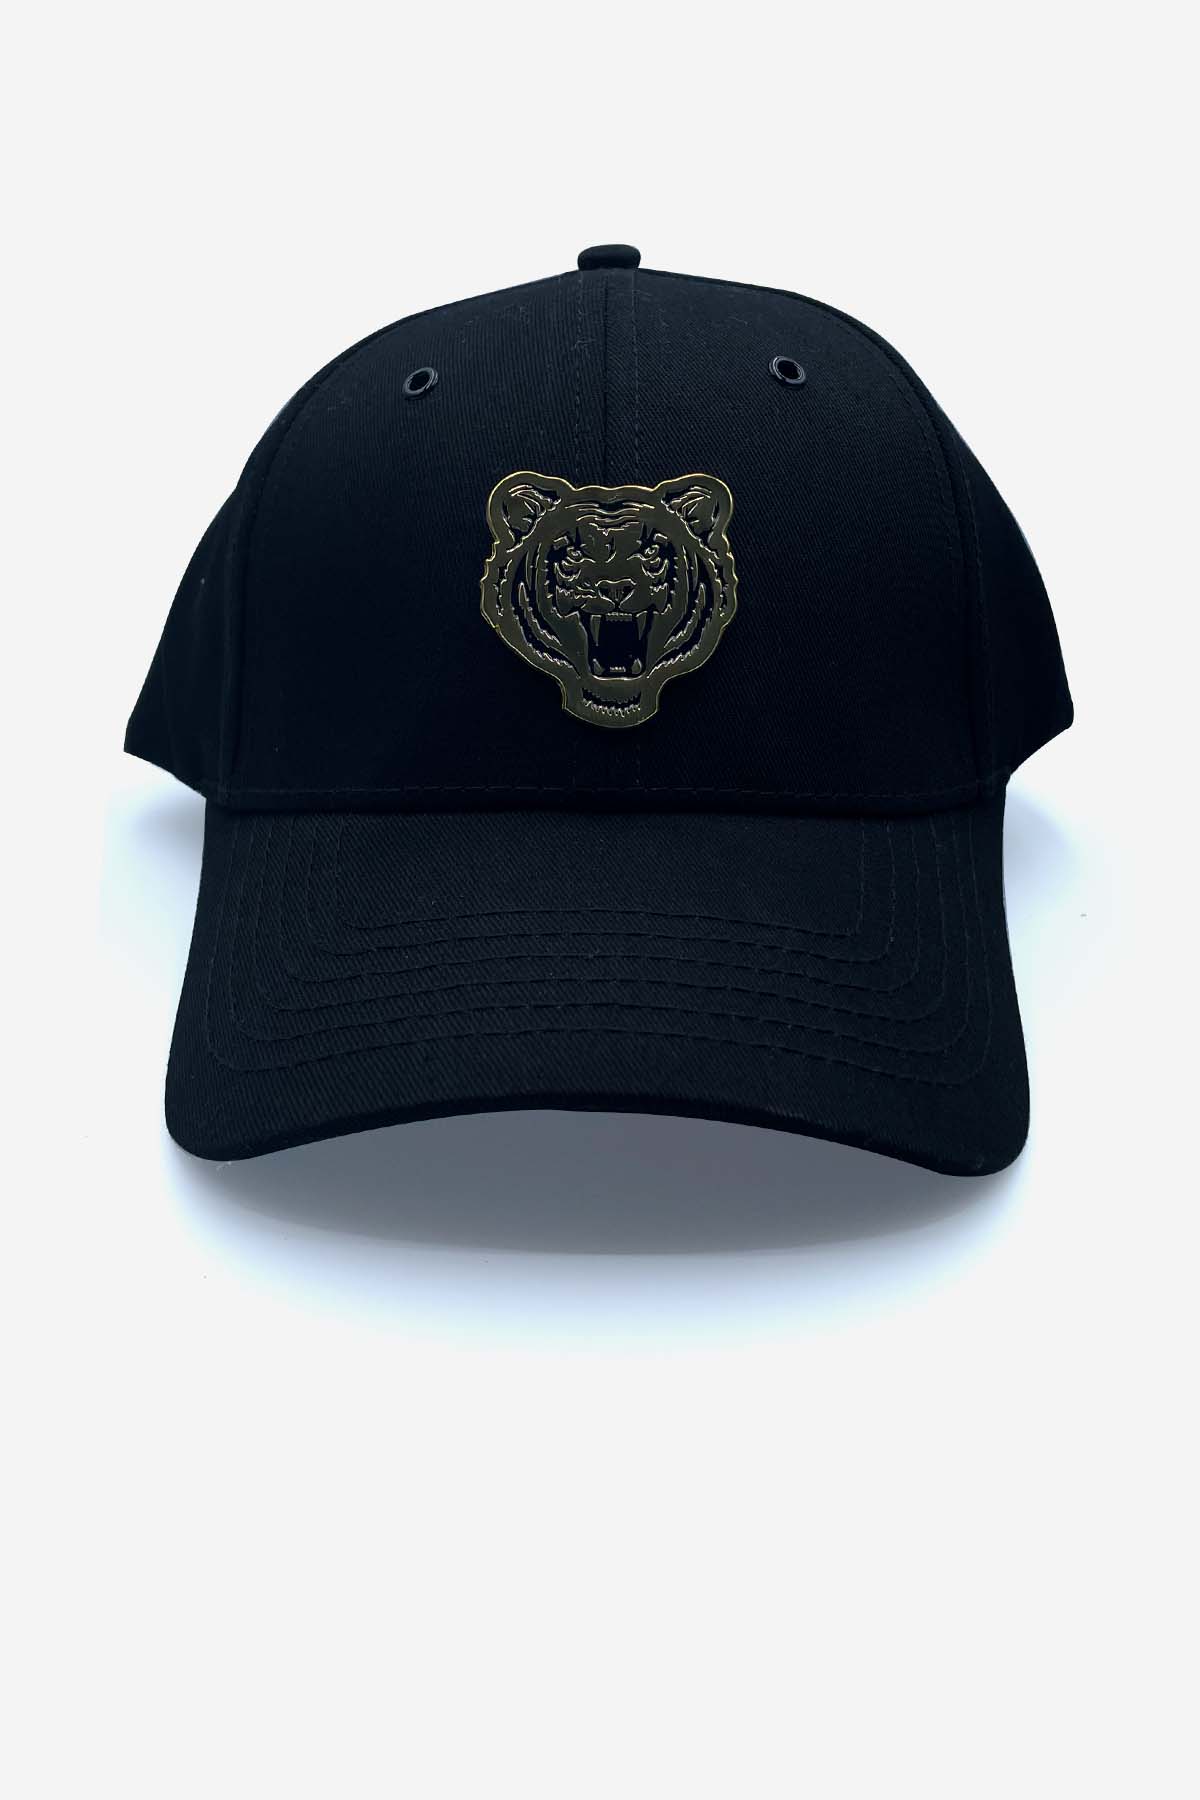 BLACK TIGER CAP WITH GOLD LOGO